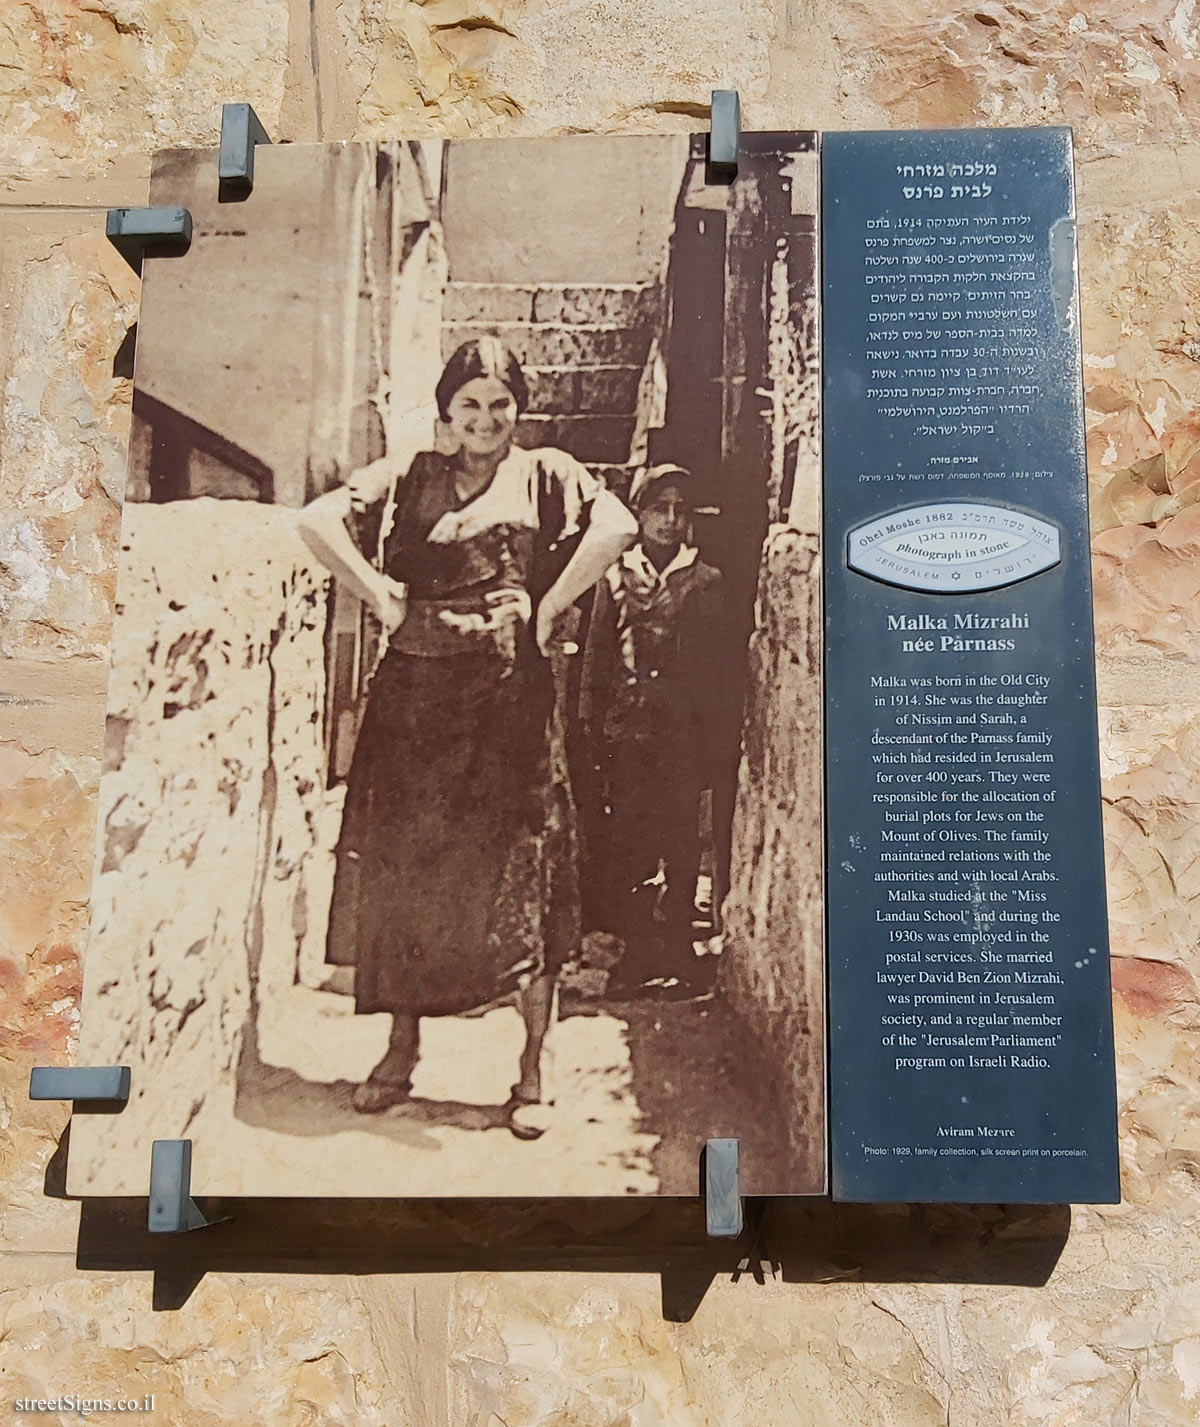 Jerusalem - Photograph in stone - Malka Mizrahi née Parnass